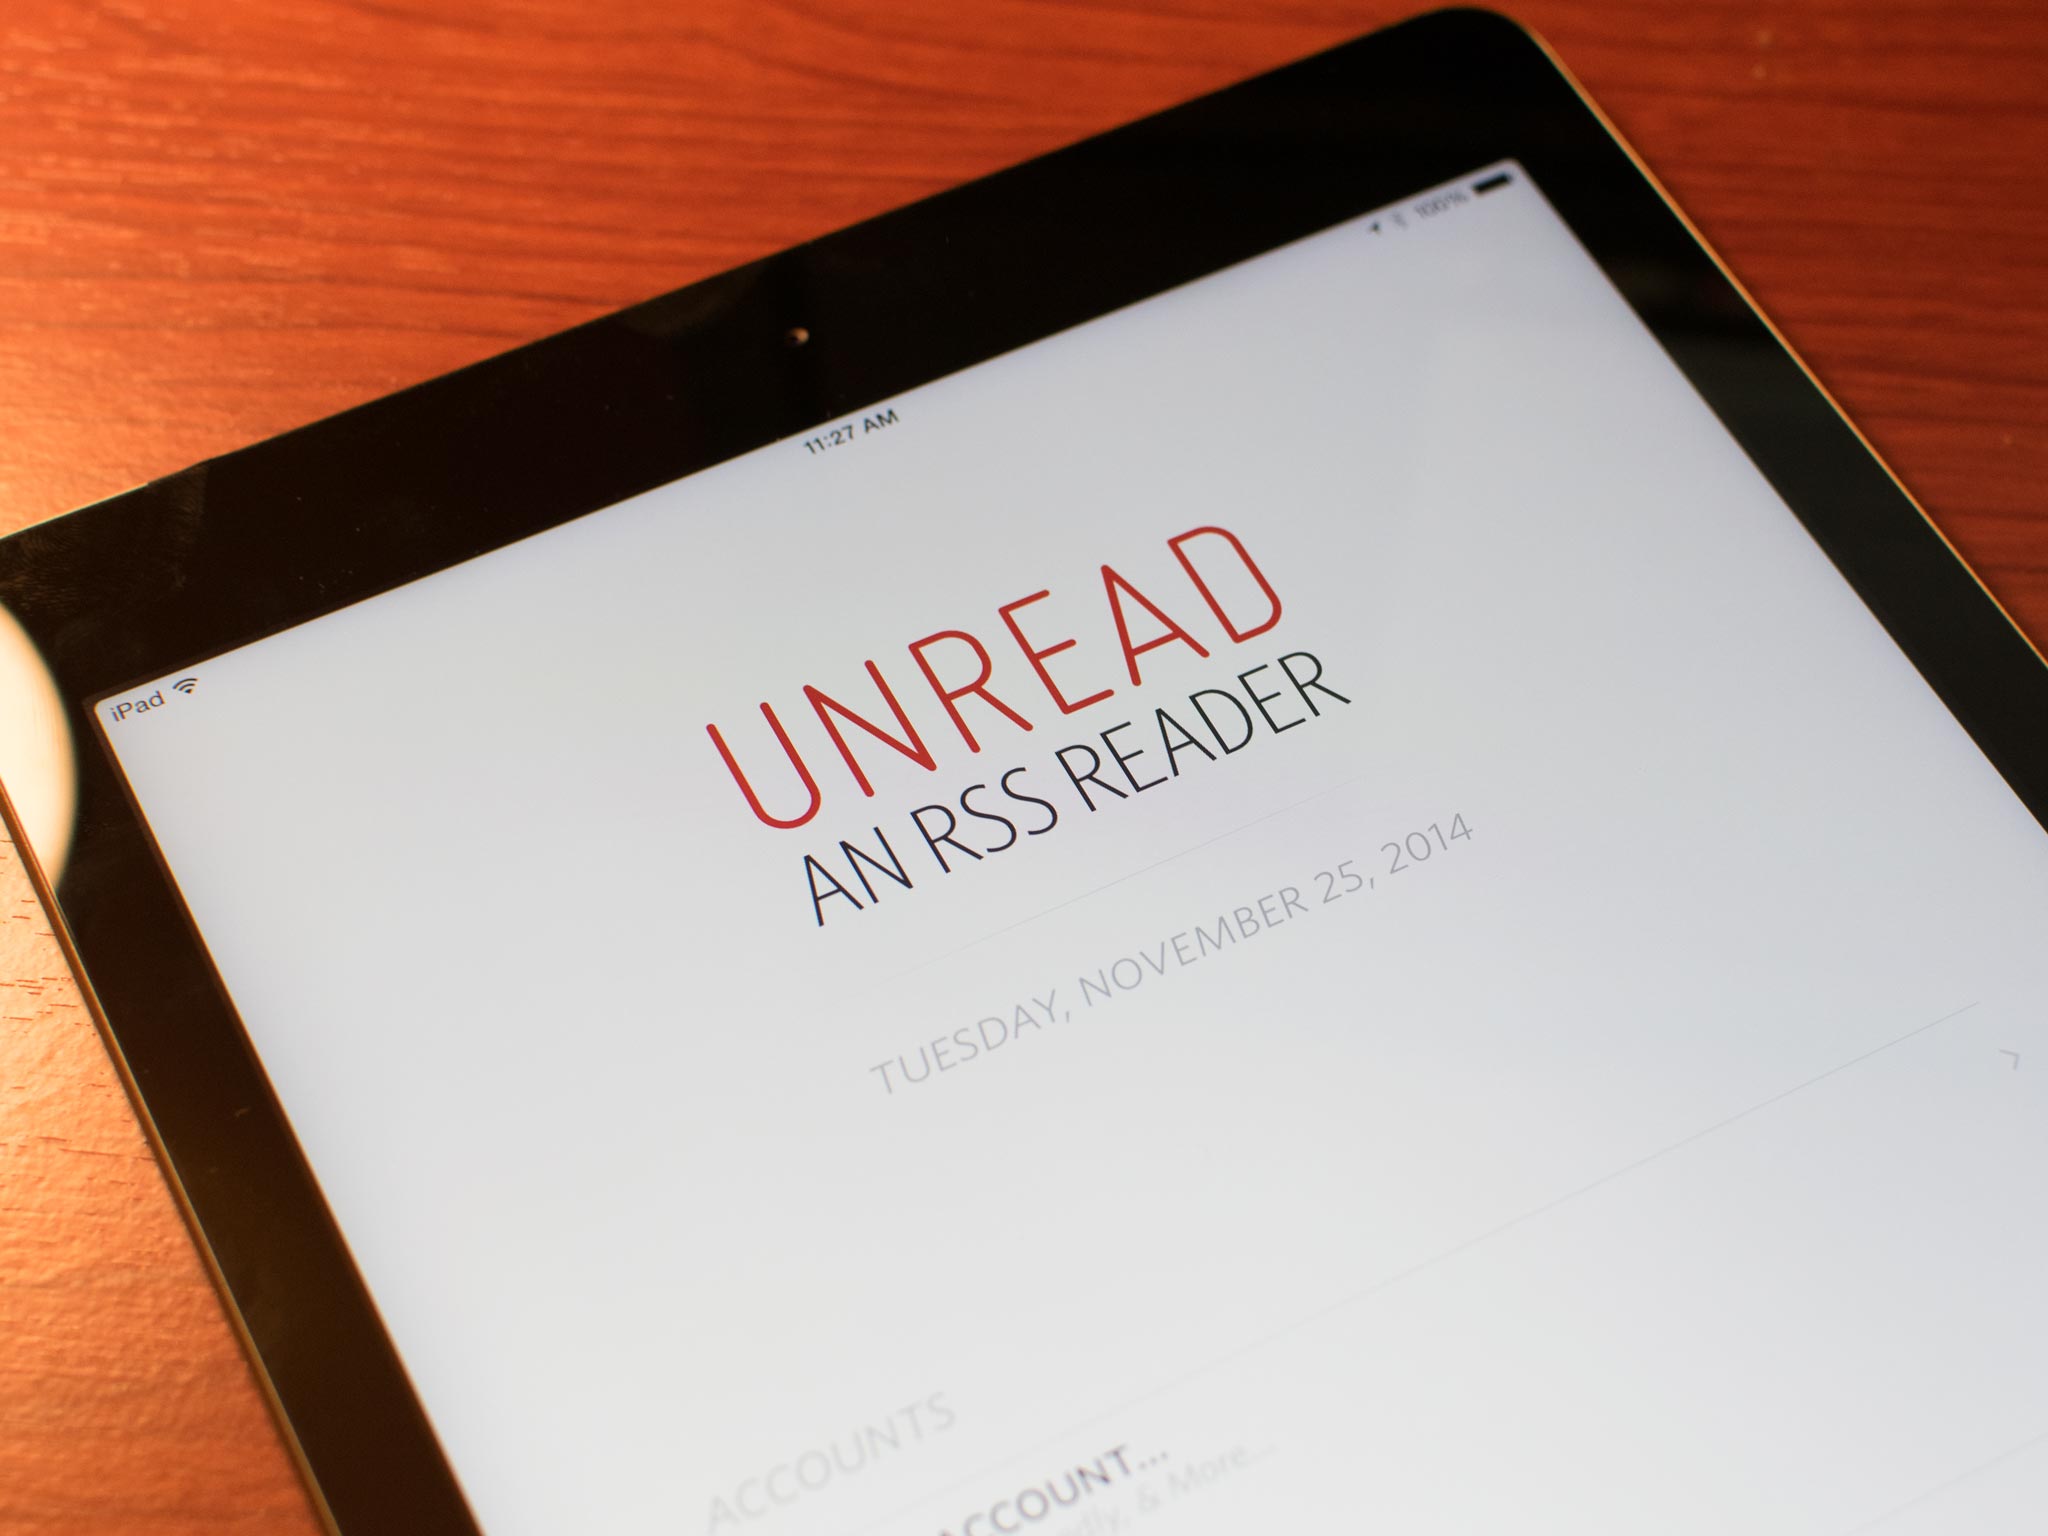 Unread RSS Reader on iPad